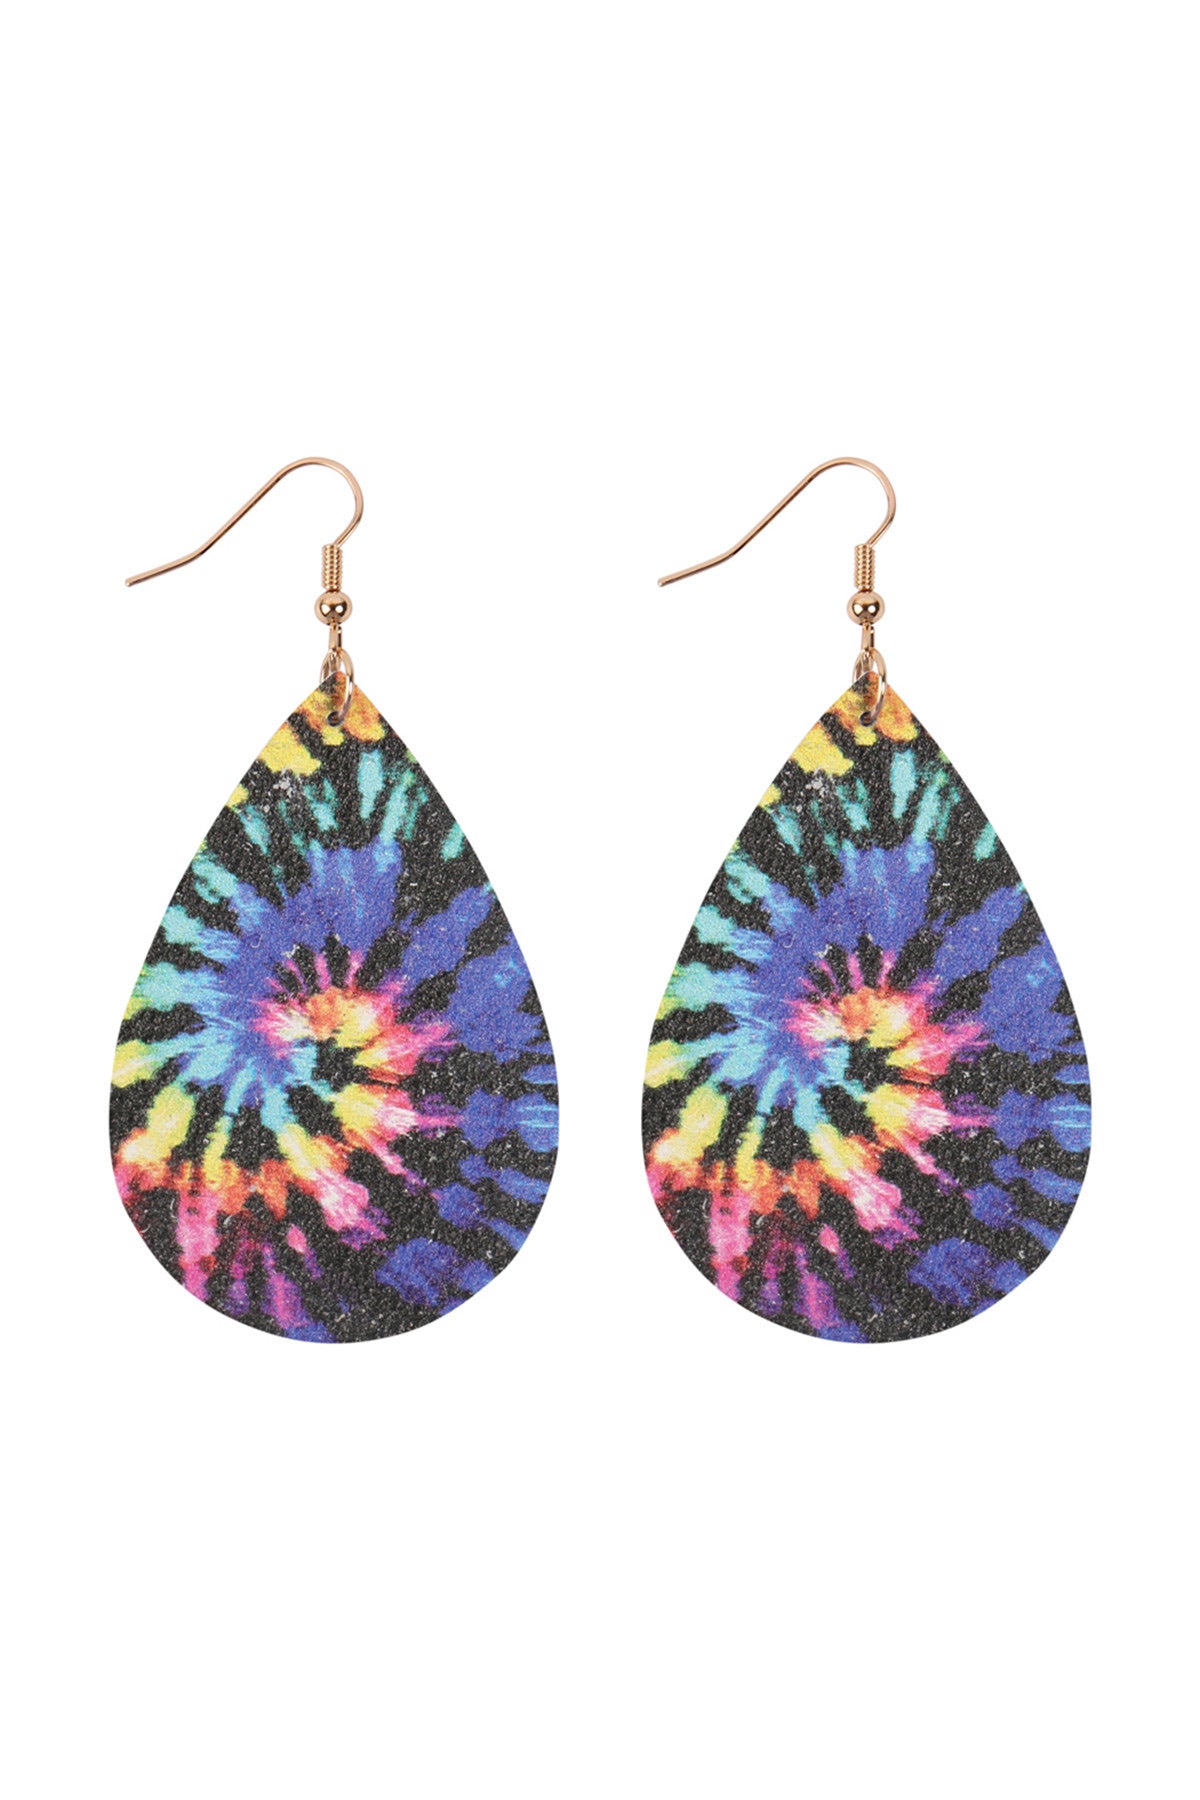 Multi-color abstract tie dye earrings